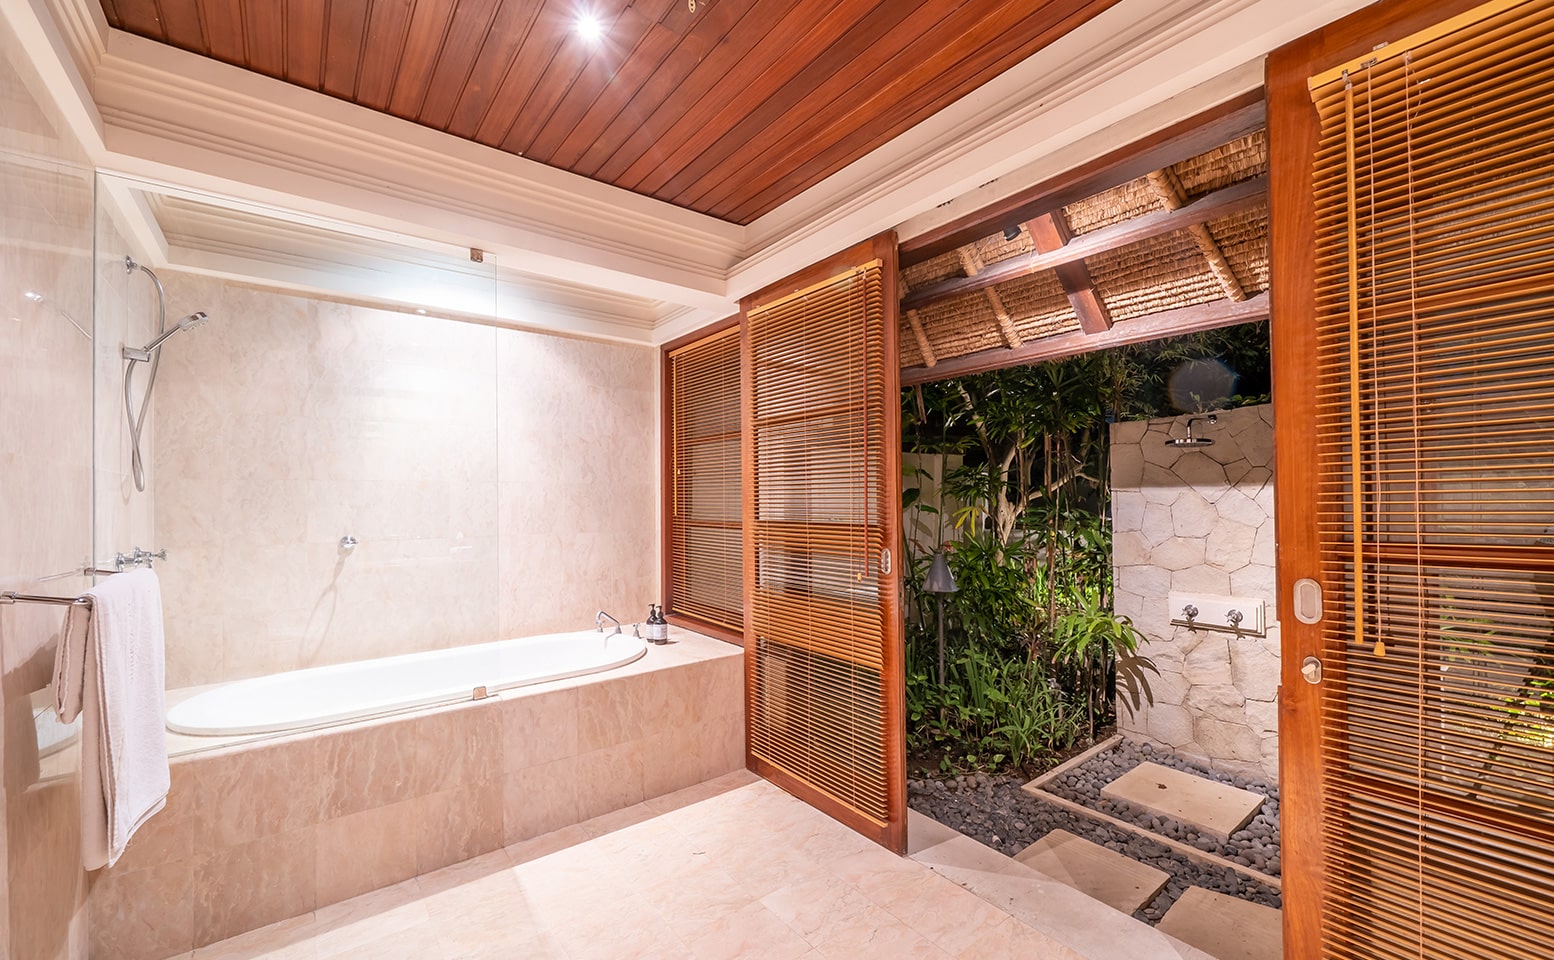 Villa Yasmine Bali - master bathroom with bathub and outdroor shower